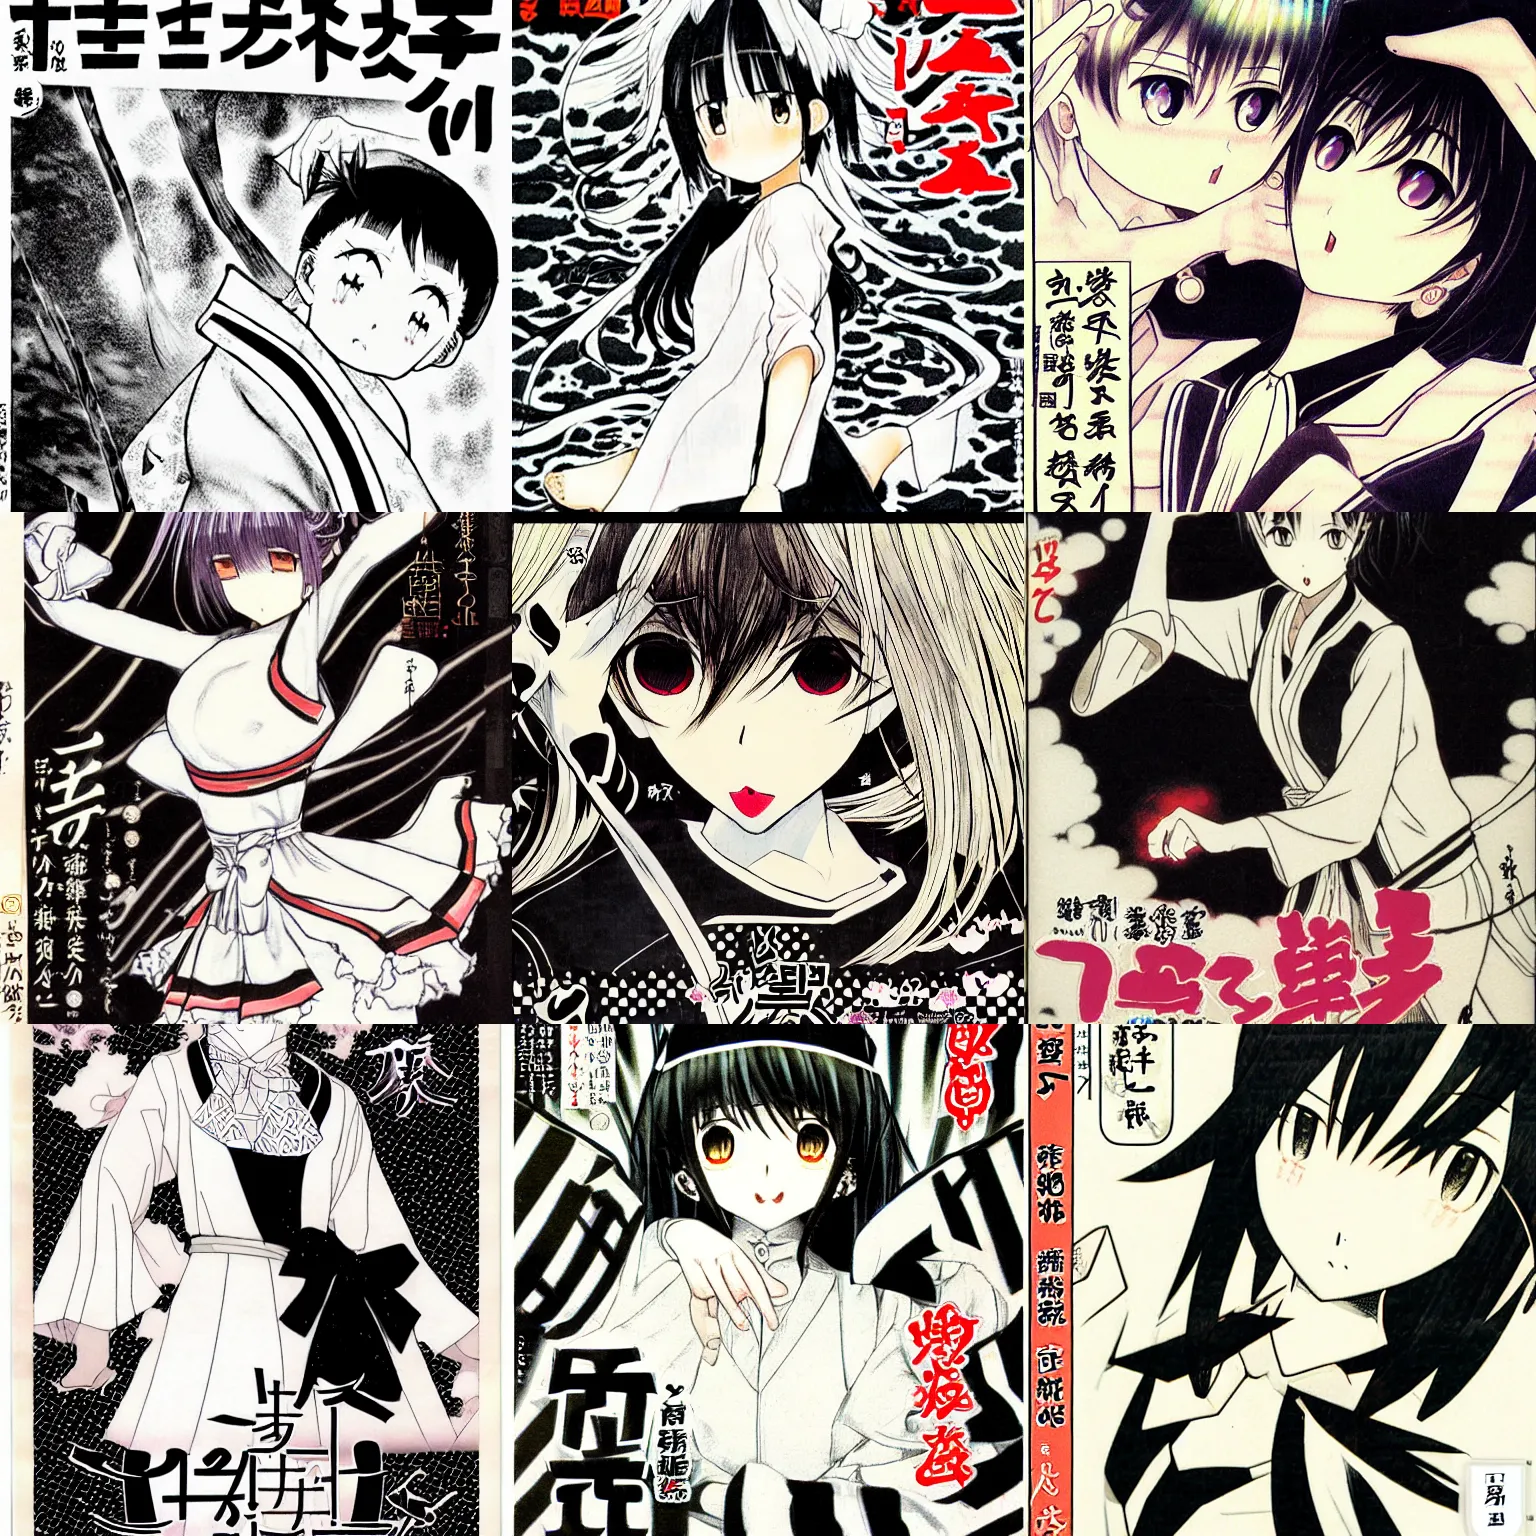 Prompt: white and black manga cover dream by ueshiba riichi, ( sakura kinomoto ), mysterious x